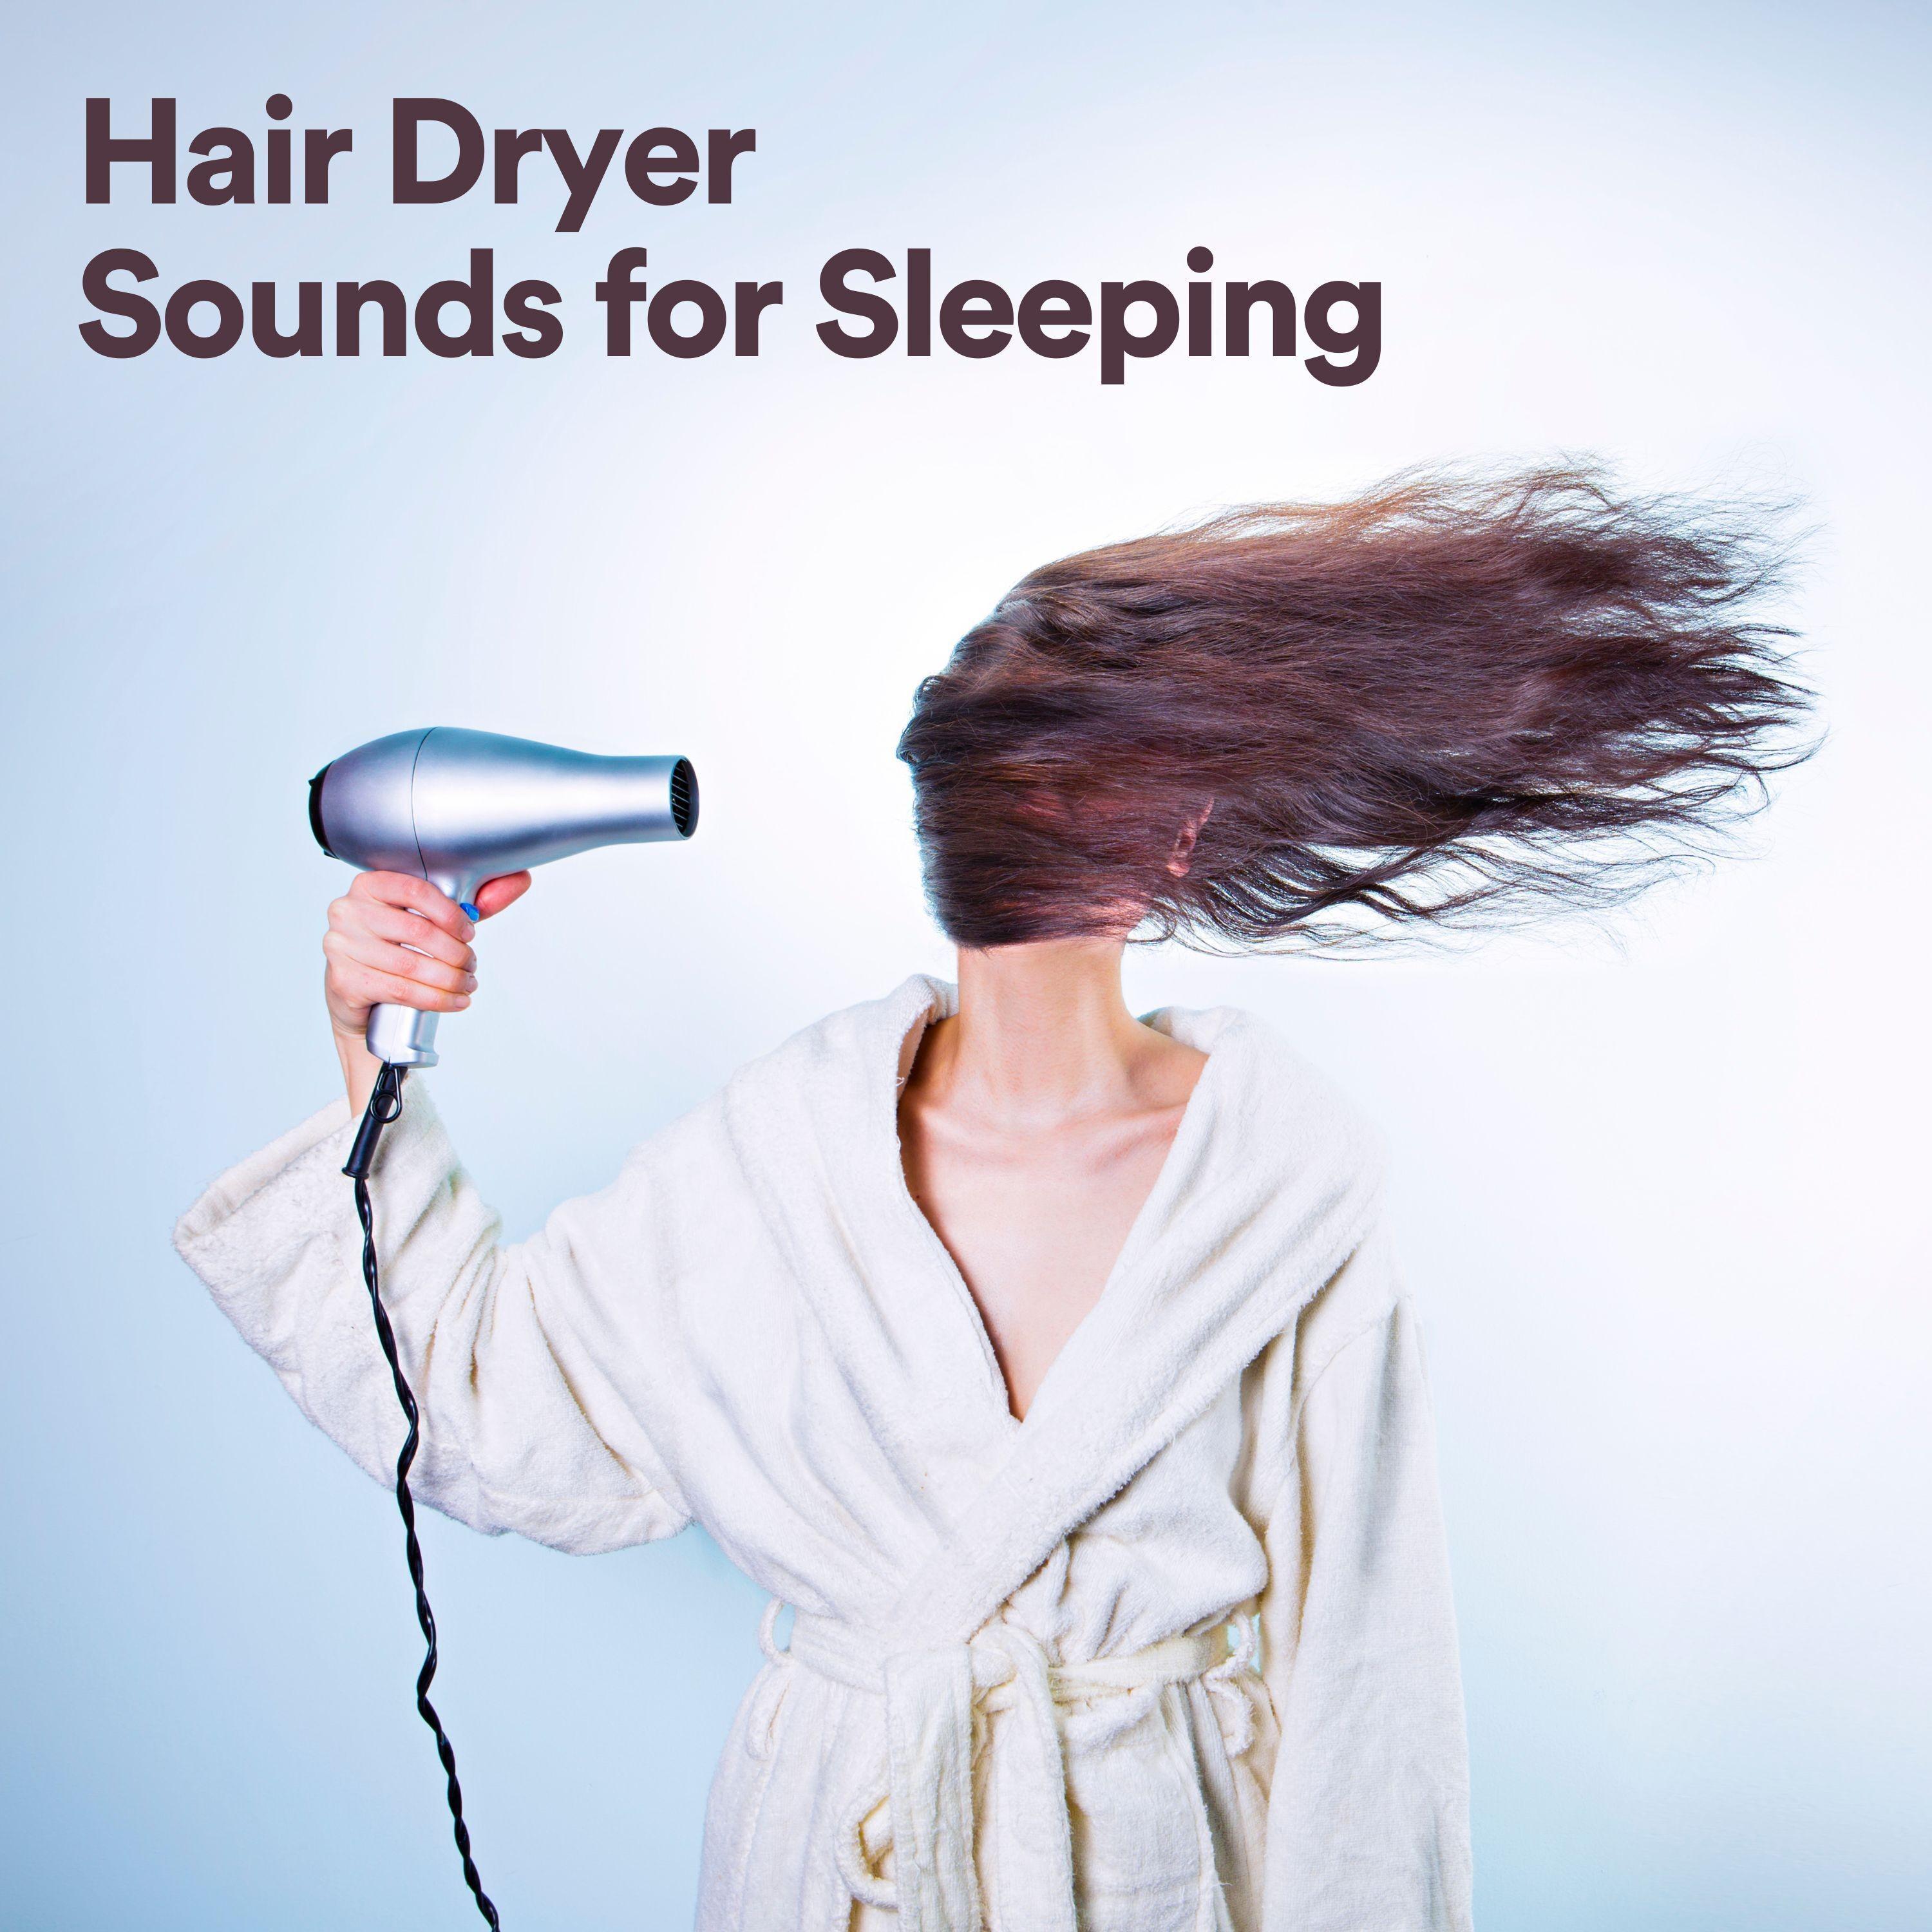 Deep Sleep Hair Dryers - Soft Hair Drying Sounds